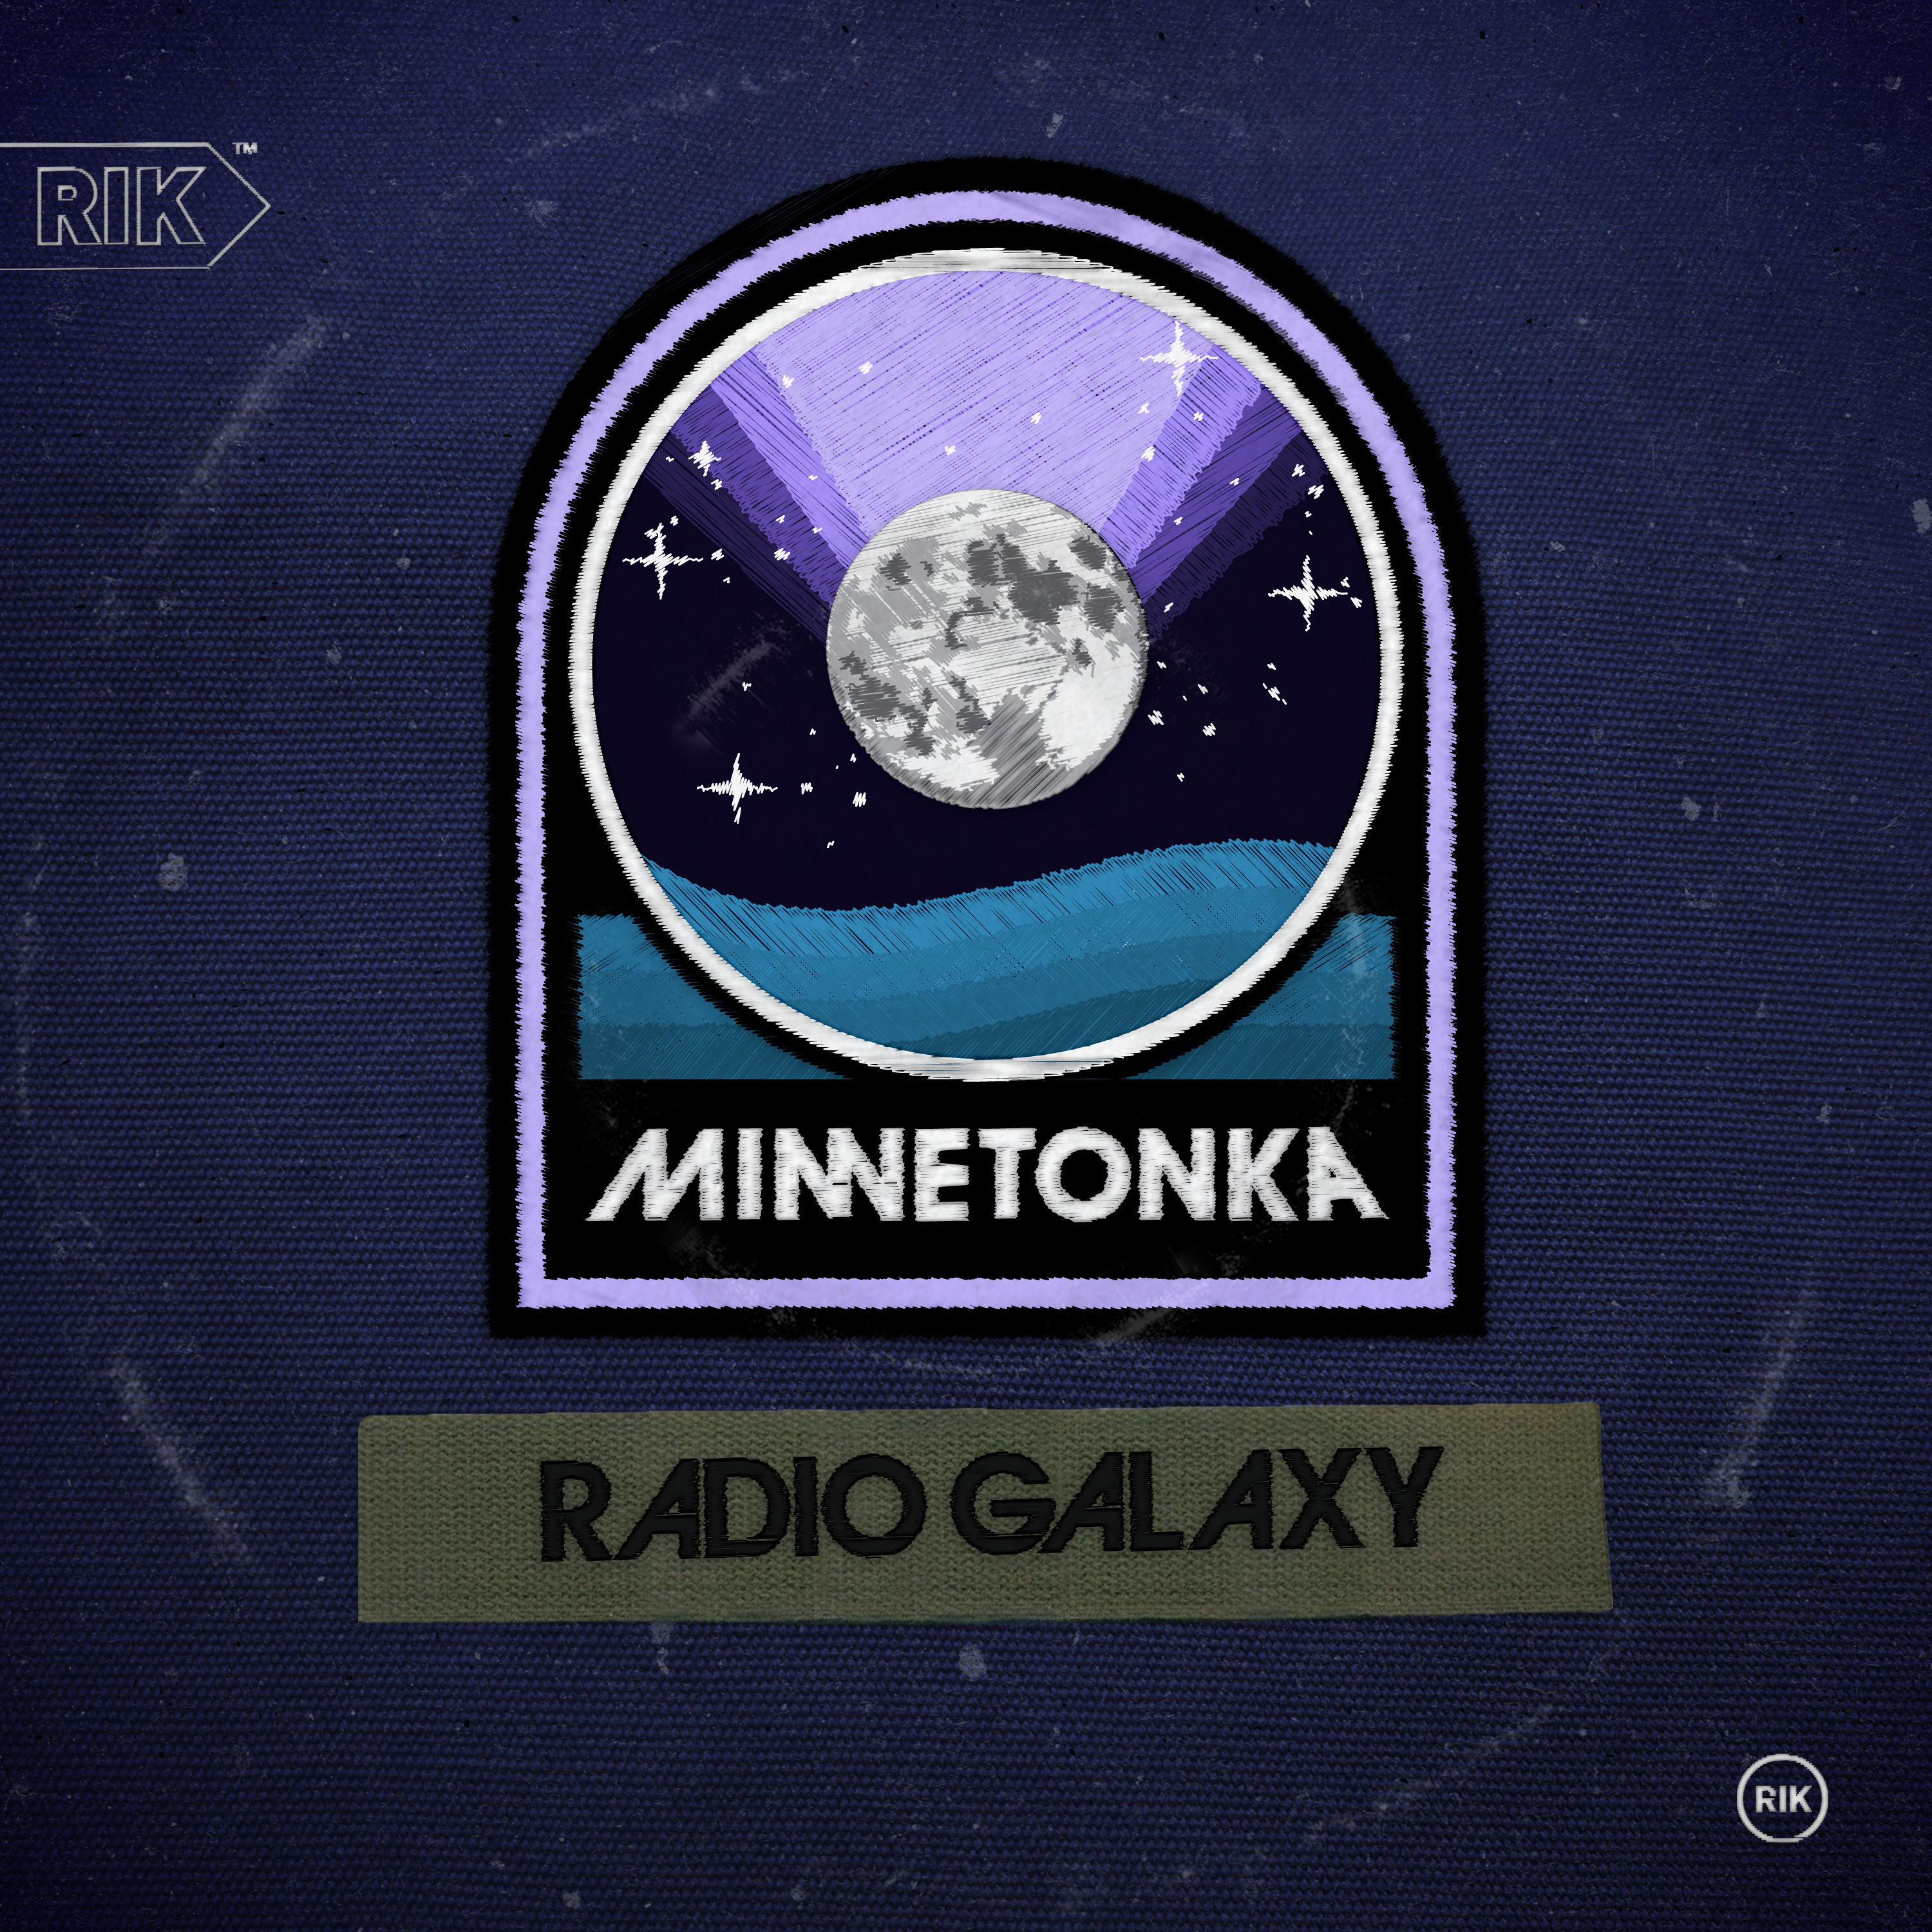 Radio Galaxy — “Minnetonka”